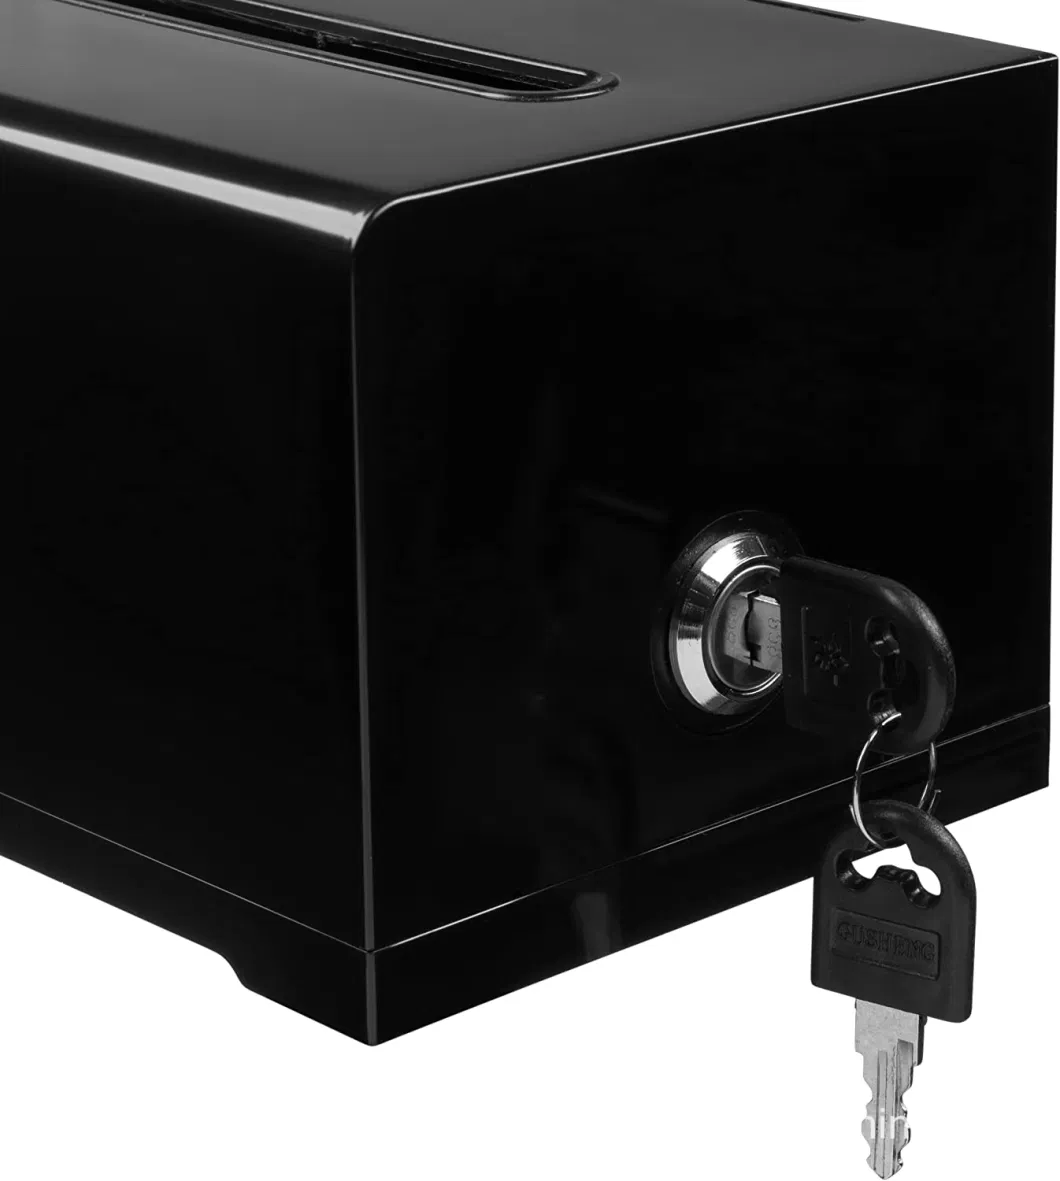 Black Plastic Money Donation Box Acrylic Fund Box with Lock and Key